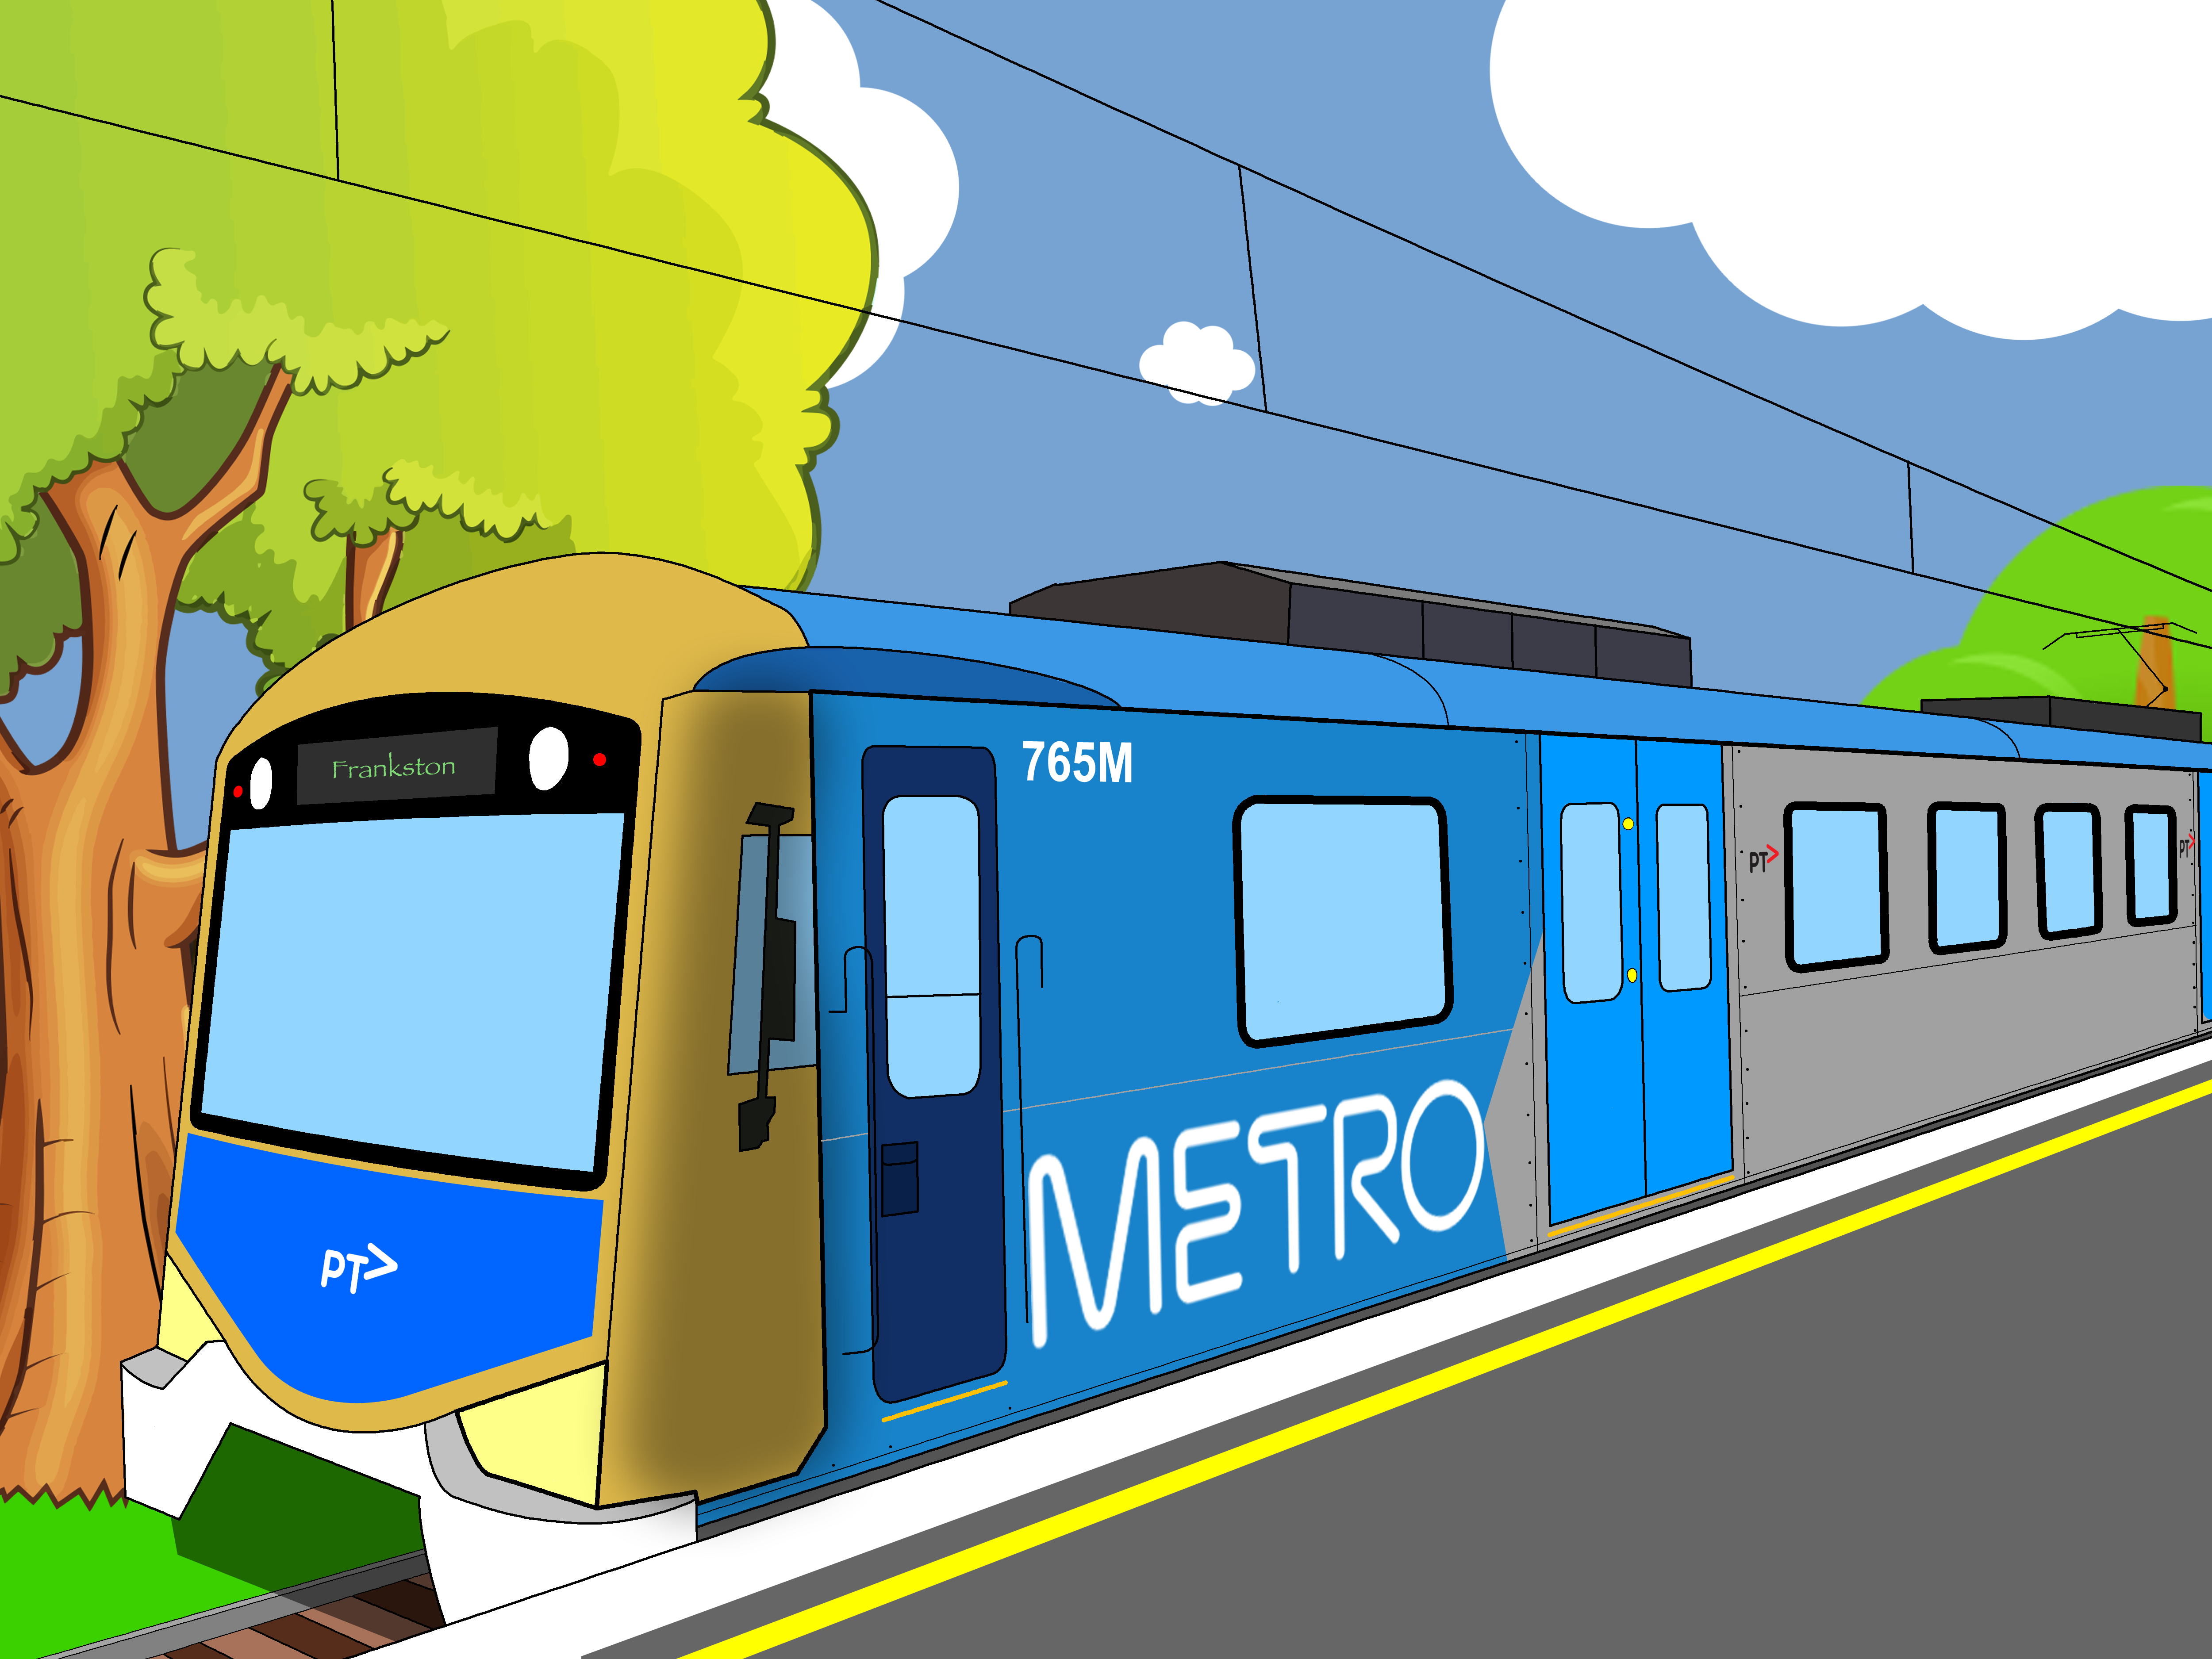 Siemens train cartoon by MasinaT on DeviantArt